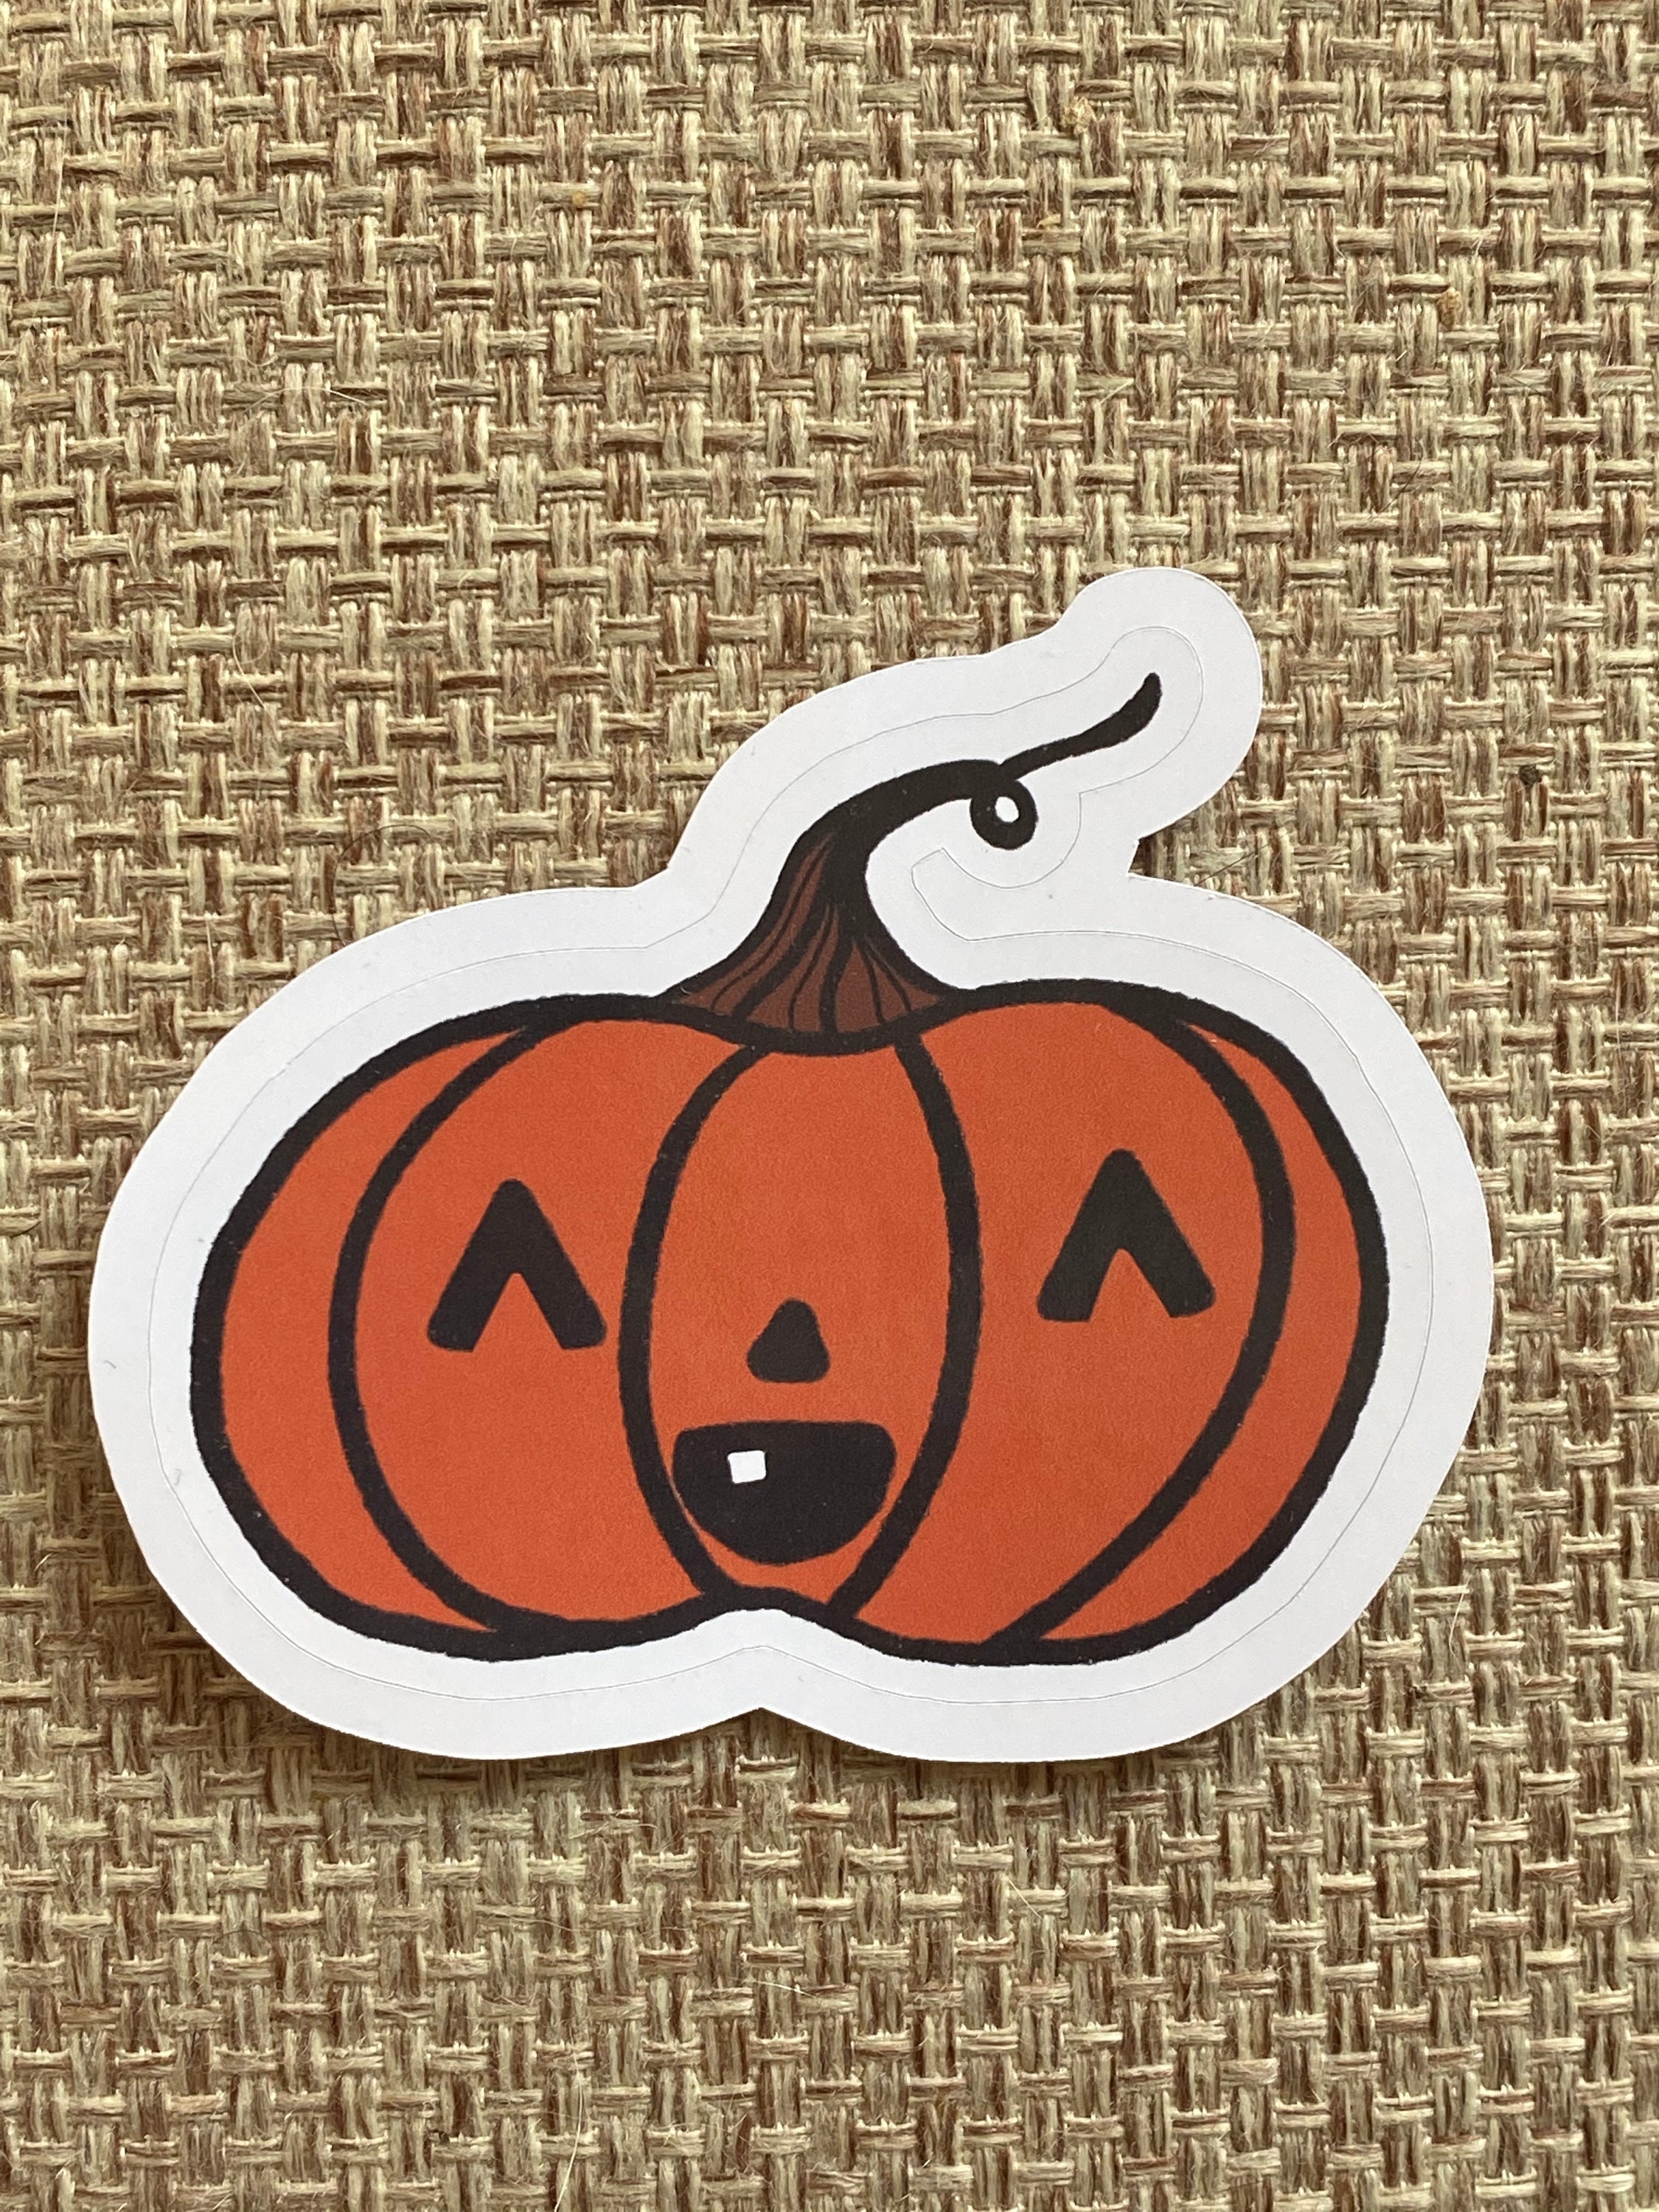 Halloween Spooky 2 Sticker Pack die-cut standard stickers | Etsy